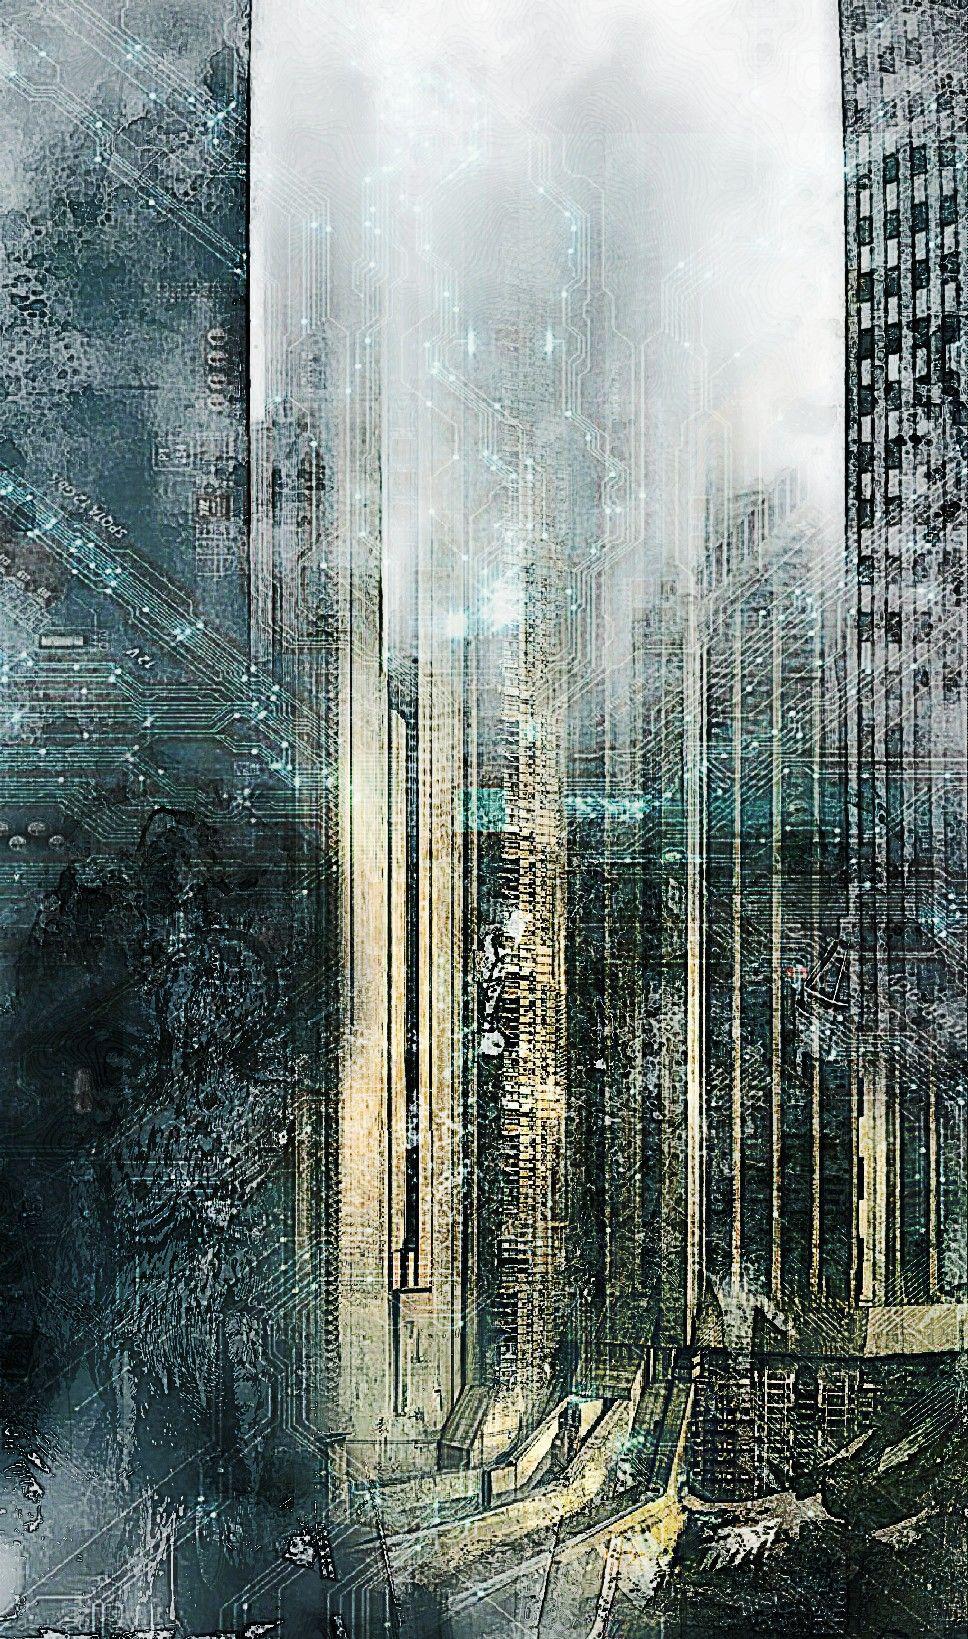 Dystopian futuristic cyberpunk city at night in a neon haze Blue and  purple glowing neon lights Urban wallpaper 3D illustration Stock  Illustration  Adobe Stock